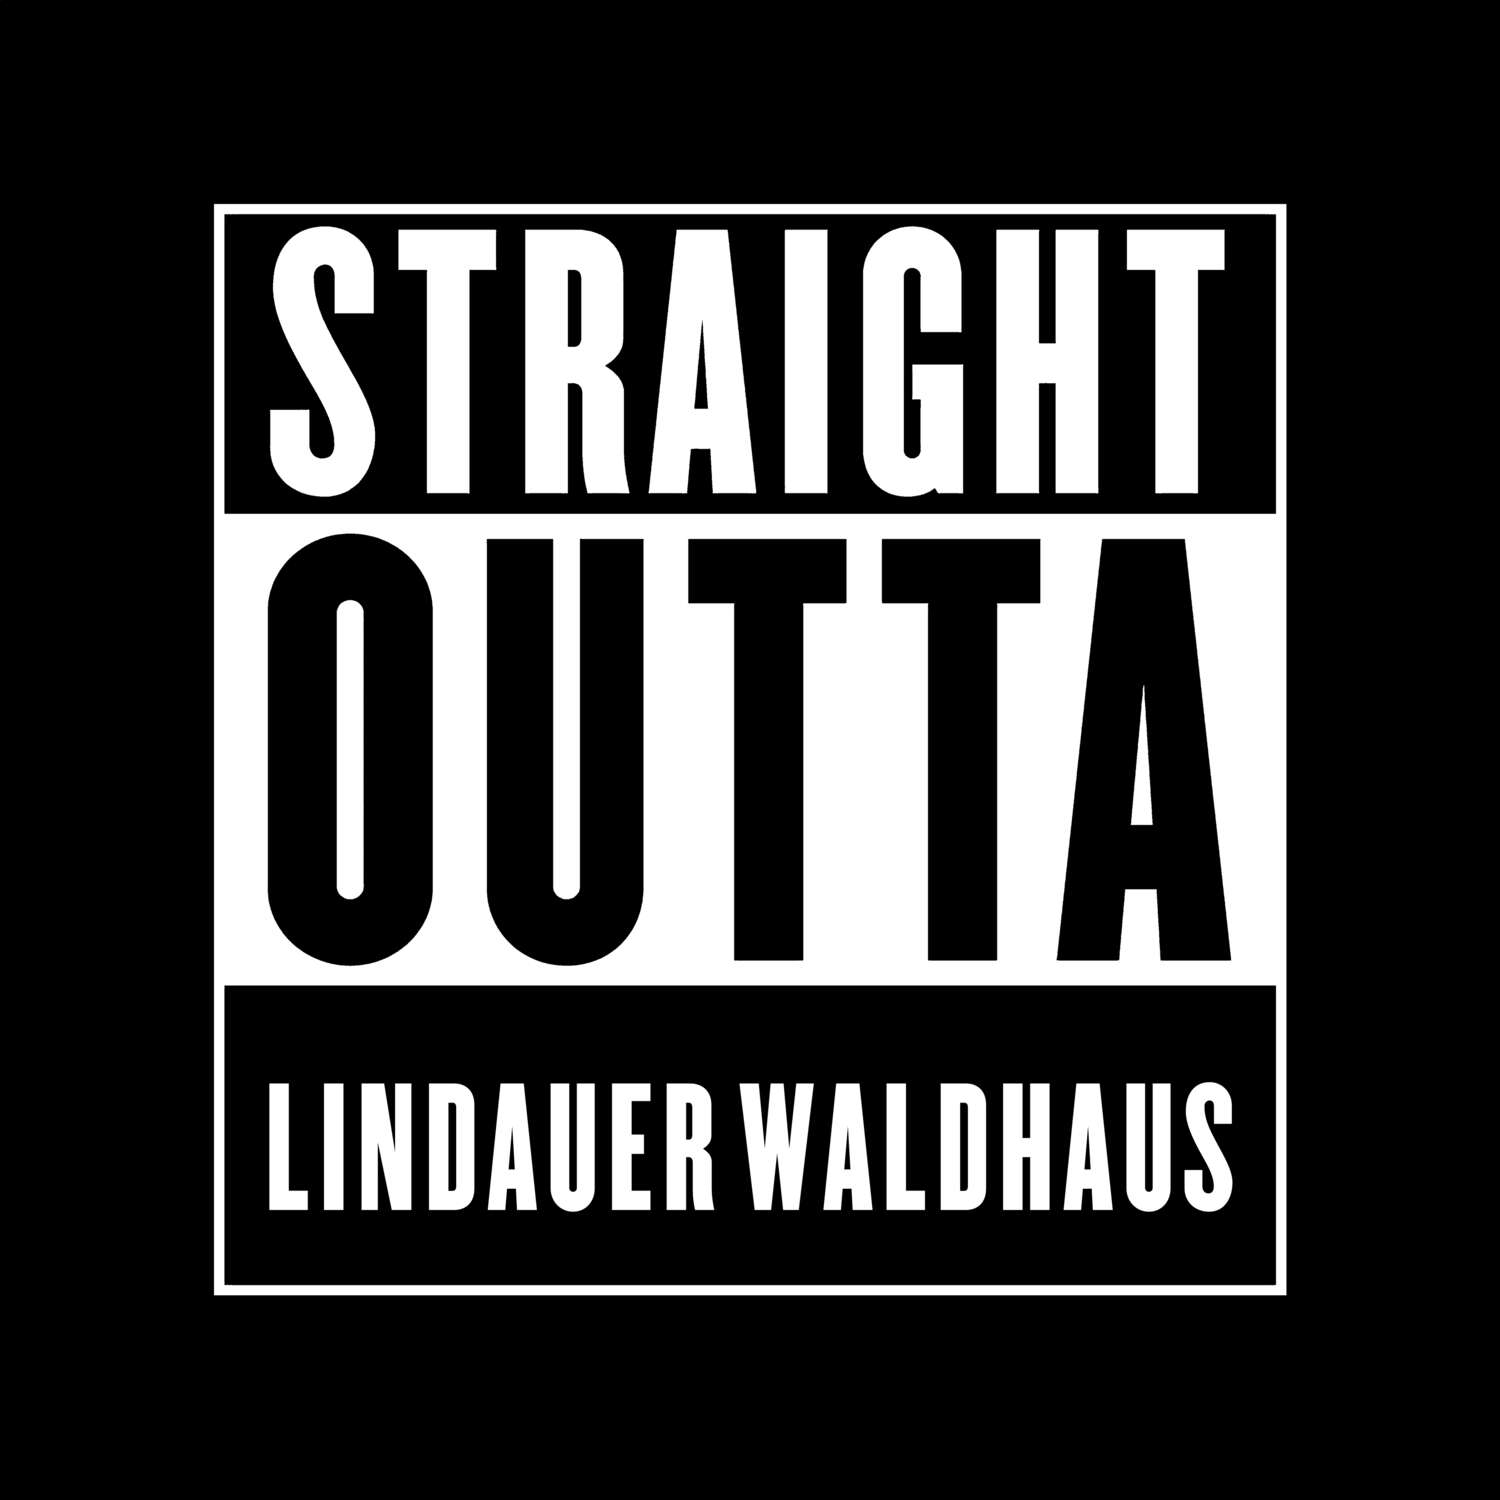 Lindauer Waldhaus T-Shirt »Straight Outta«